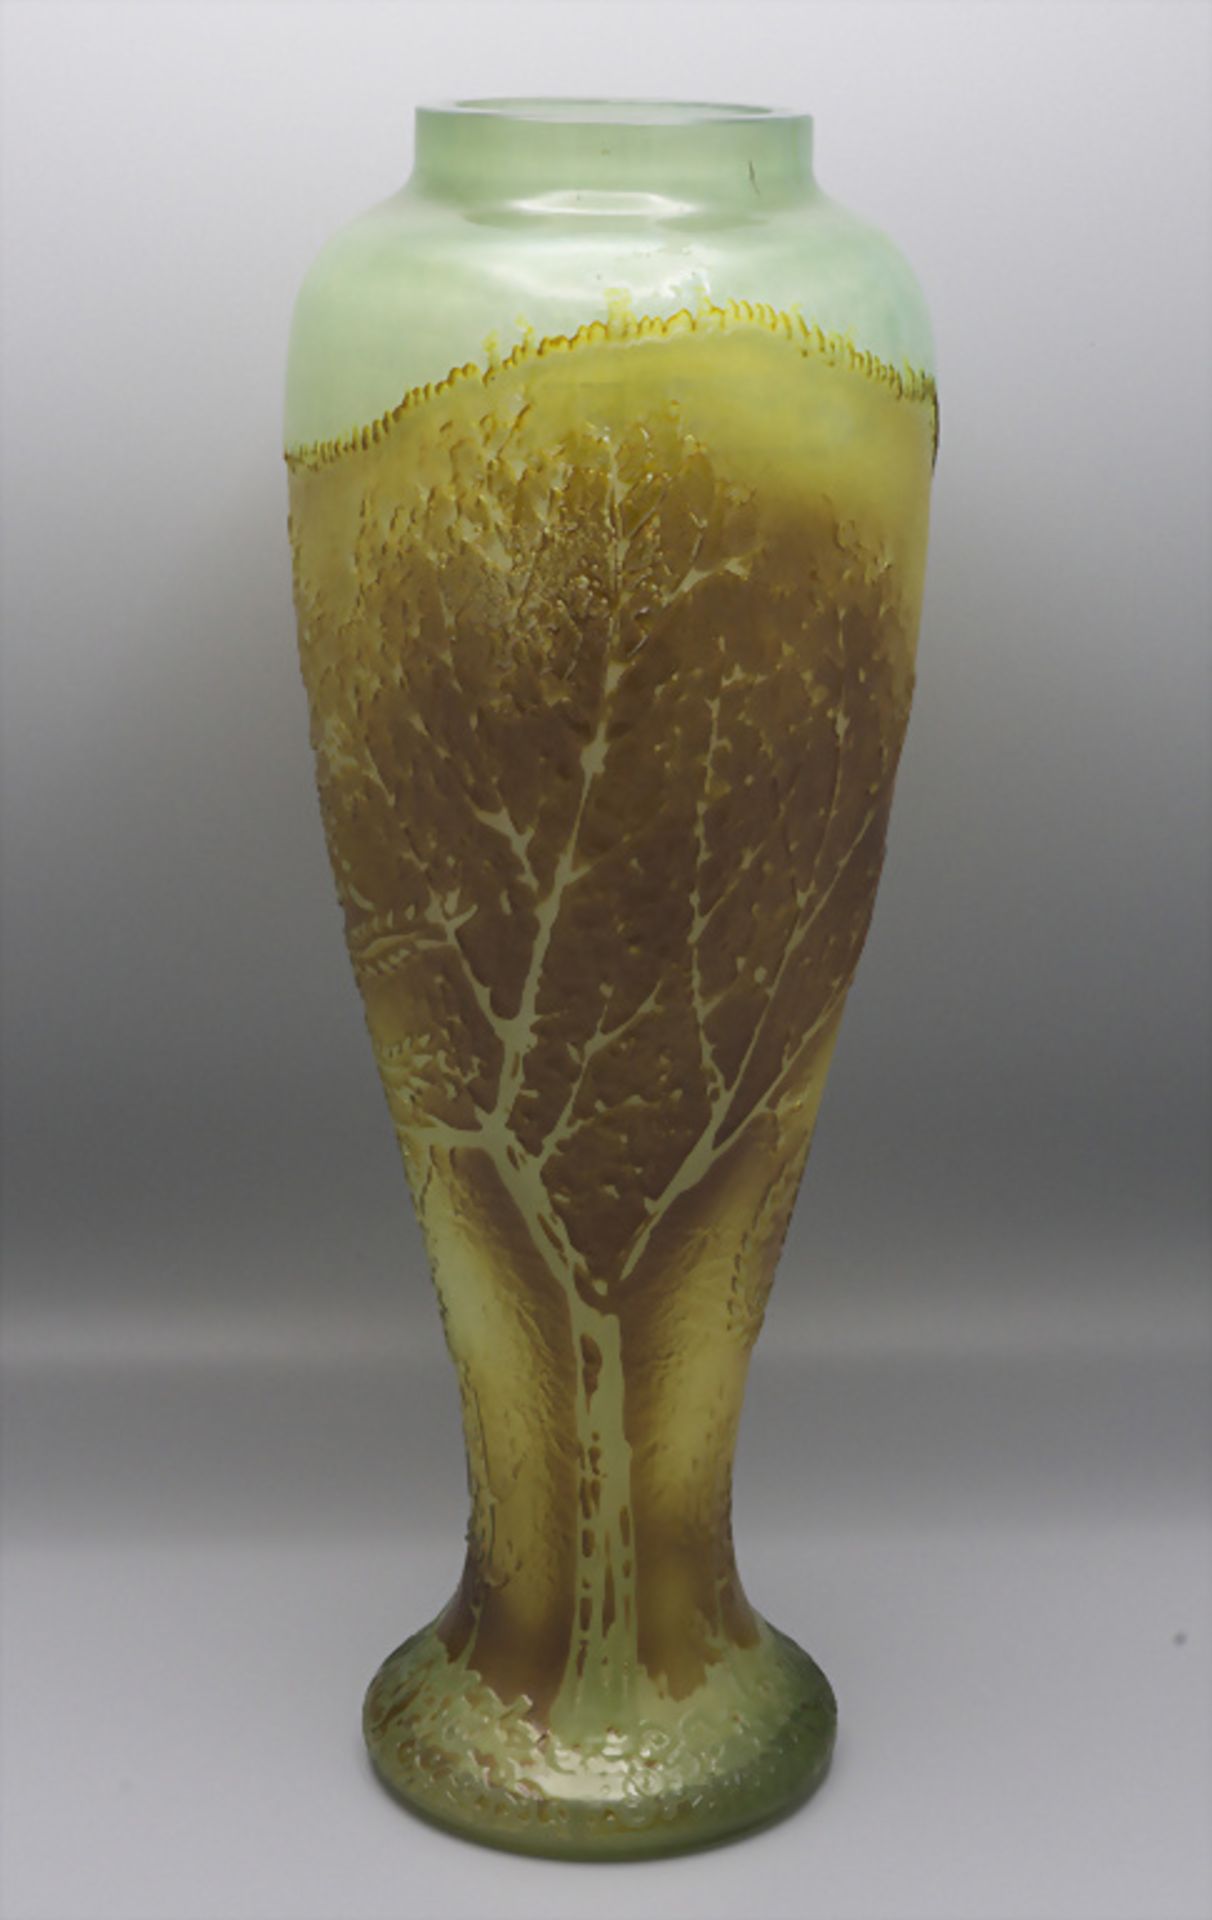 Jugendstil Ziervase / An Art Nouveau decorative glass vase, Larial, Frankreich, um 1915